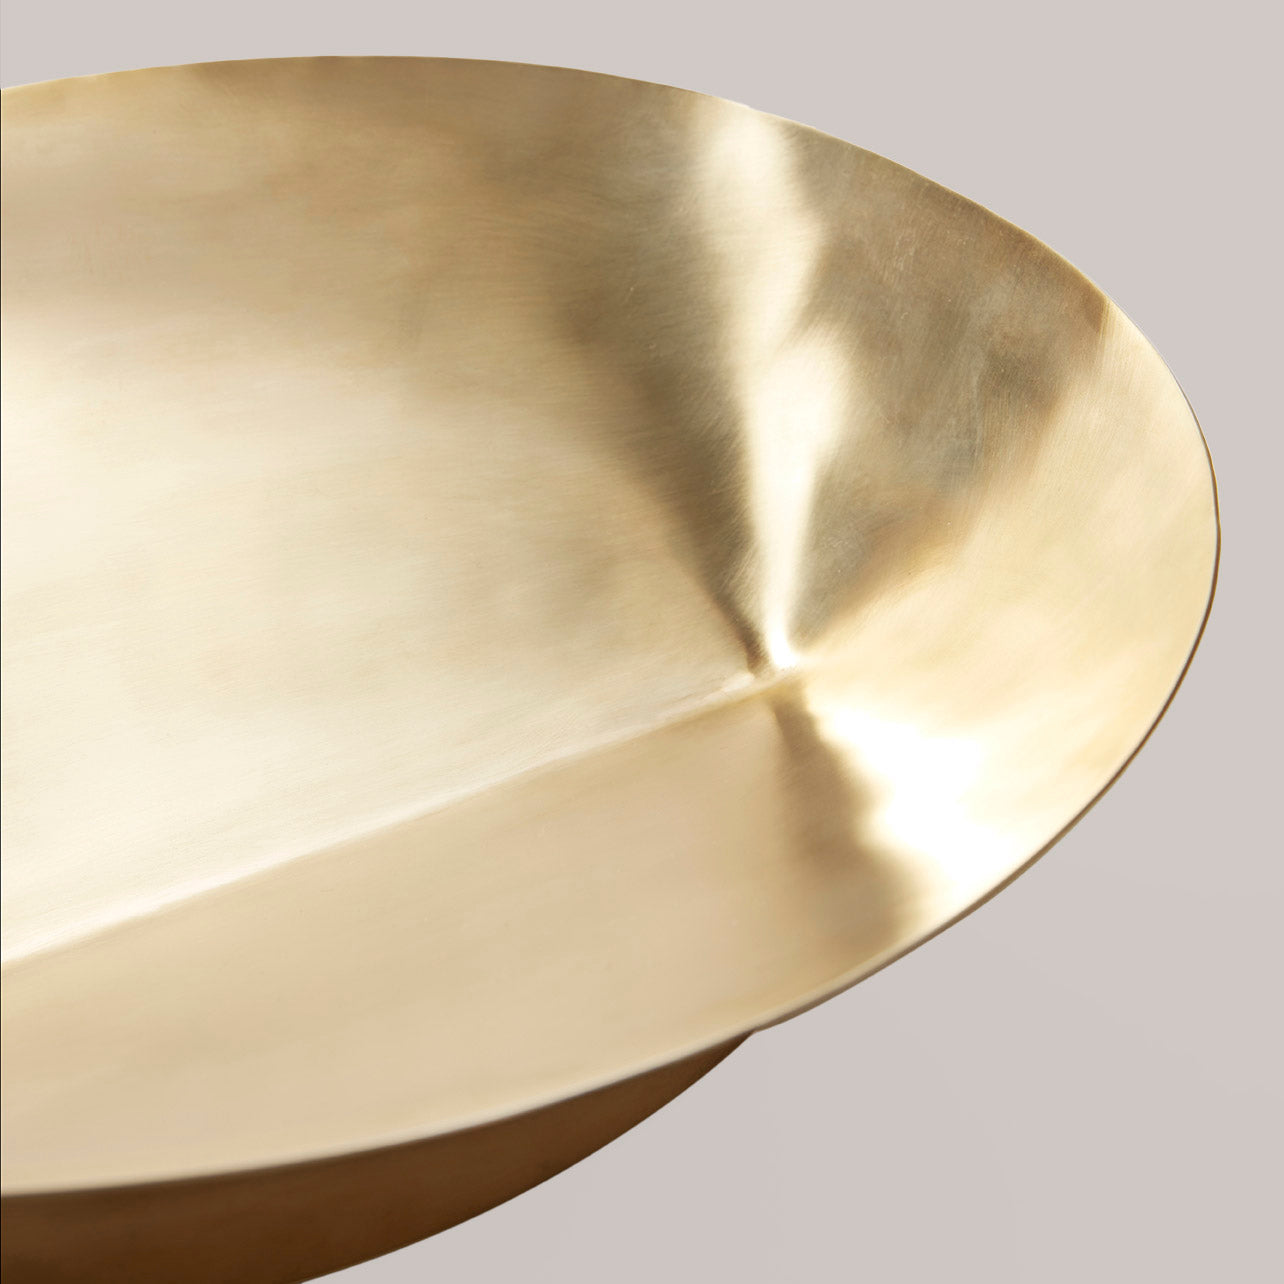 Timoclea Brass Centerpiece Brass